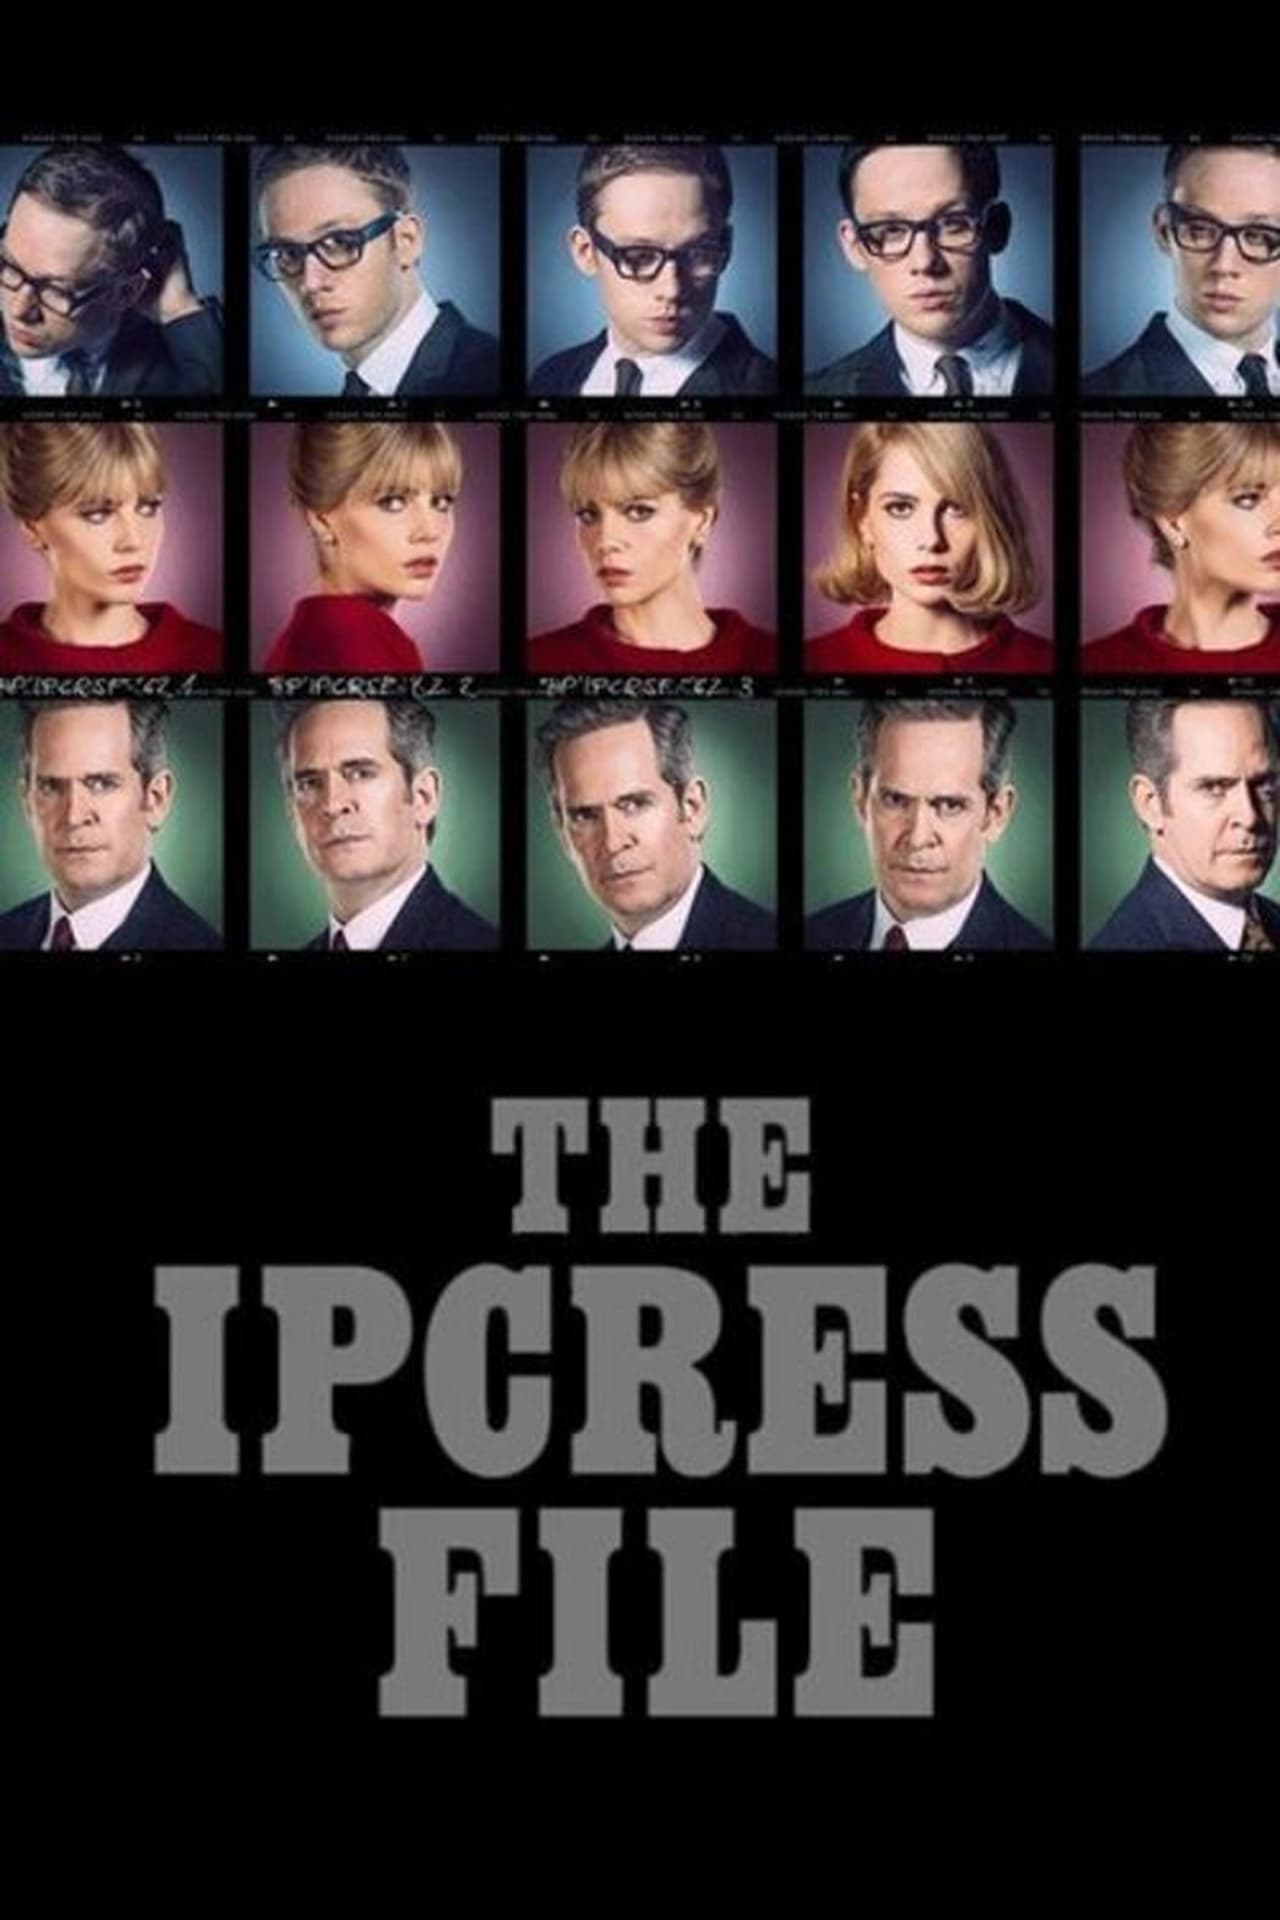 The Ipcress File (season 1)